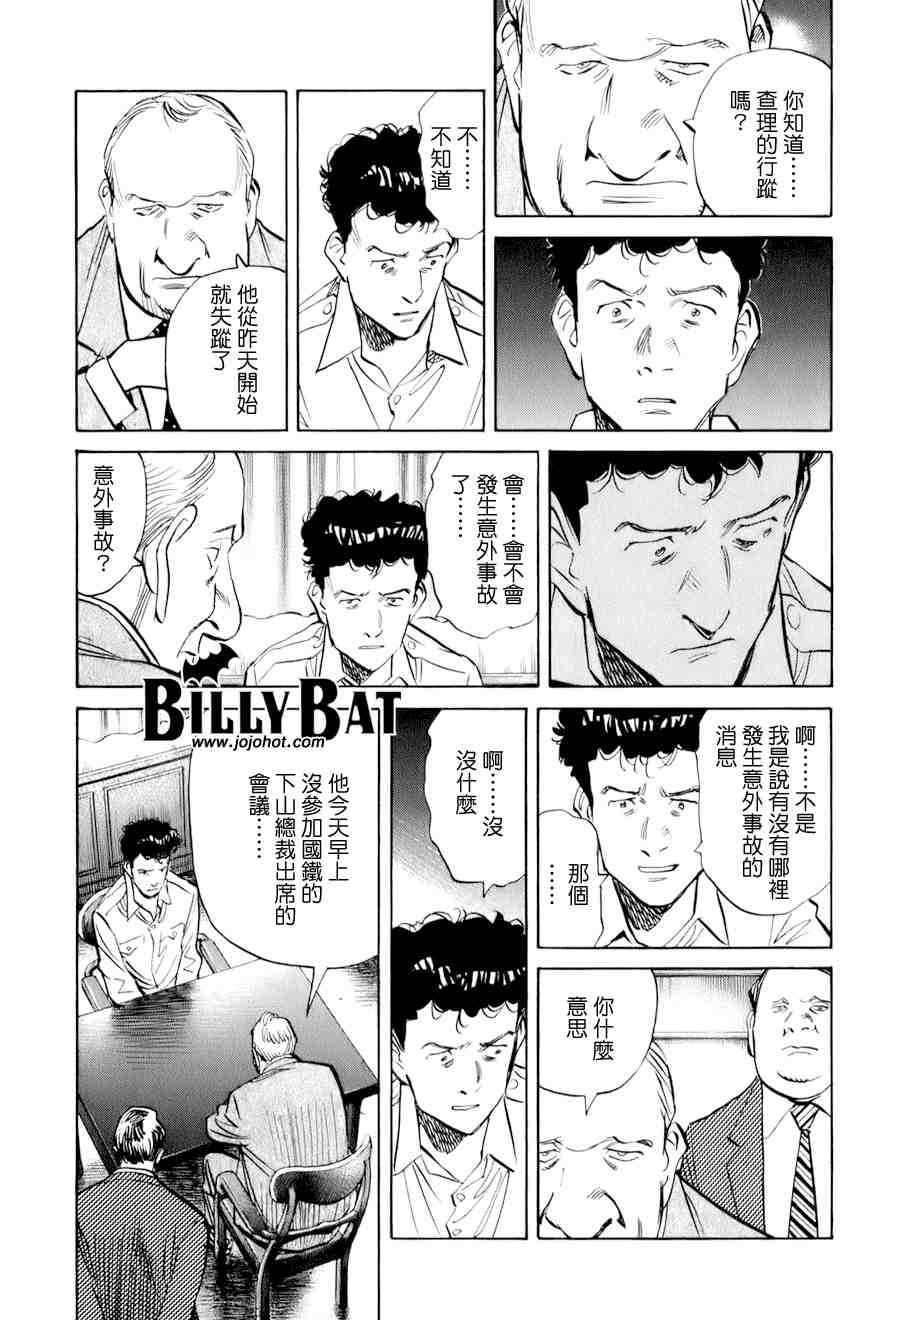 Billy_Bat - 第1卷(3/4) - 4